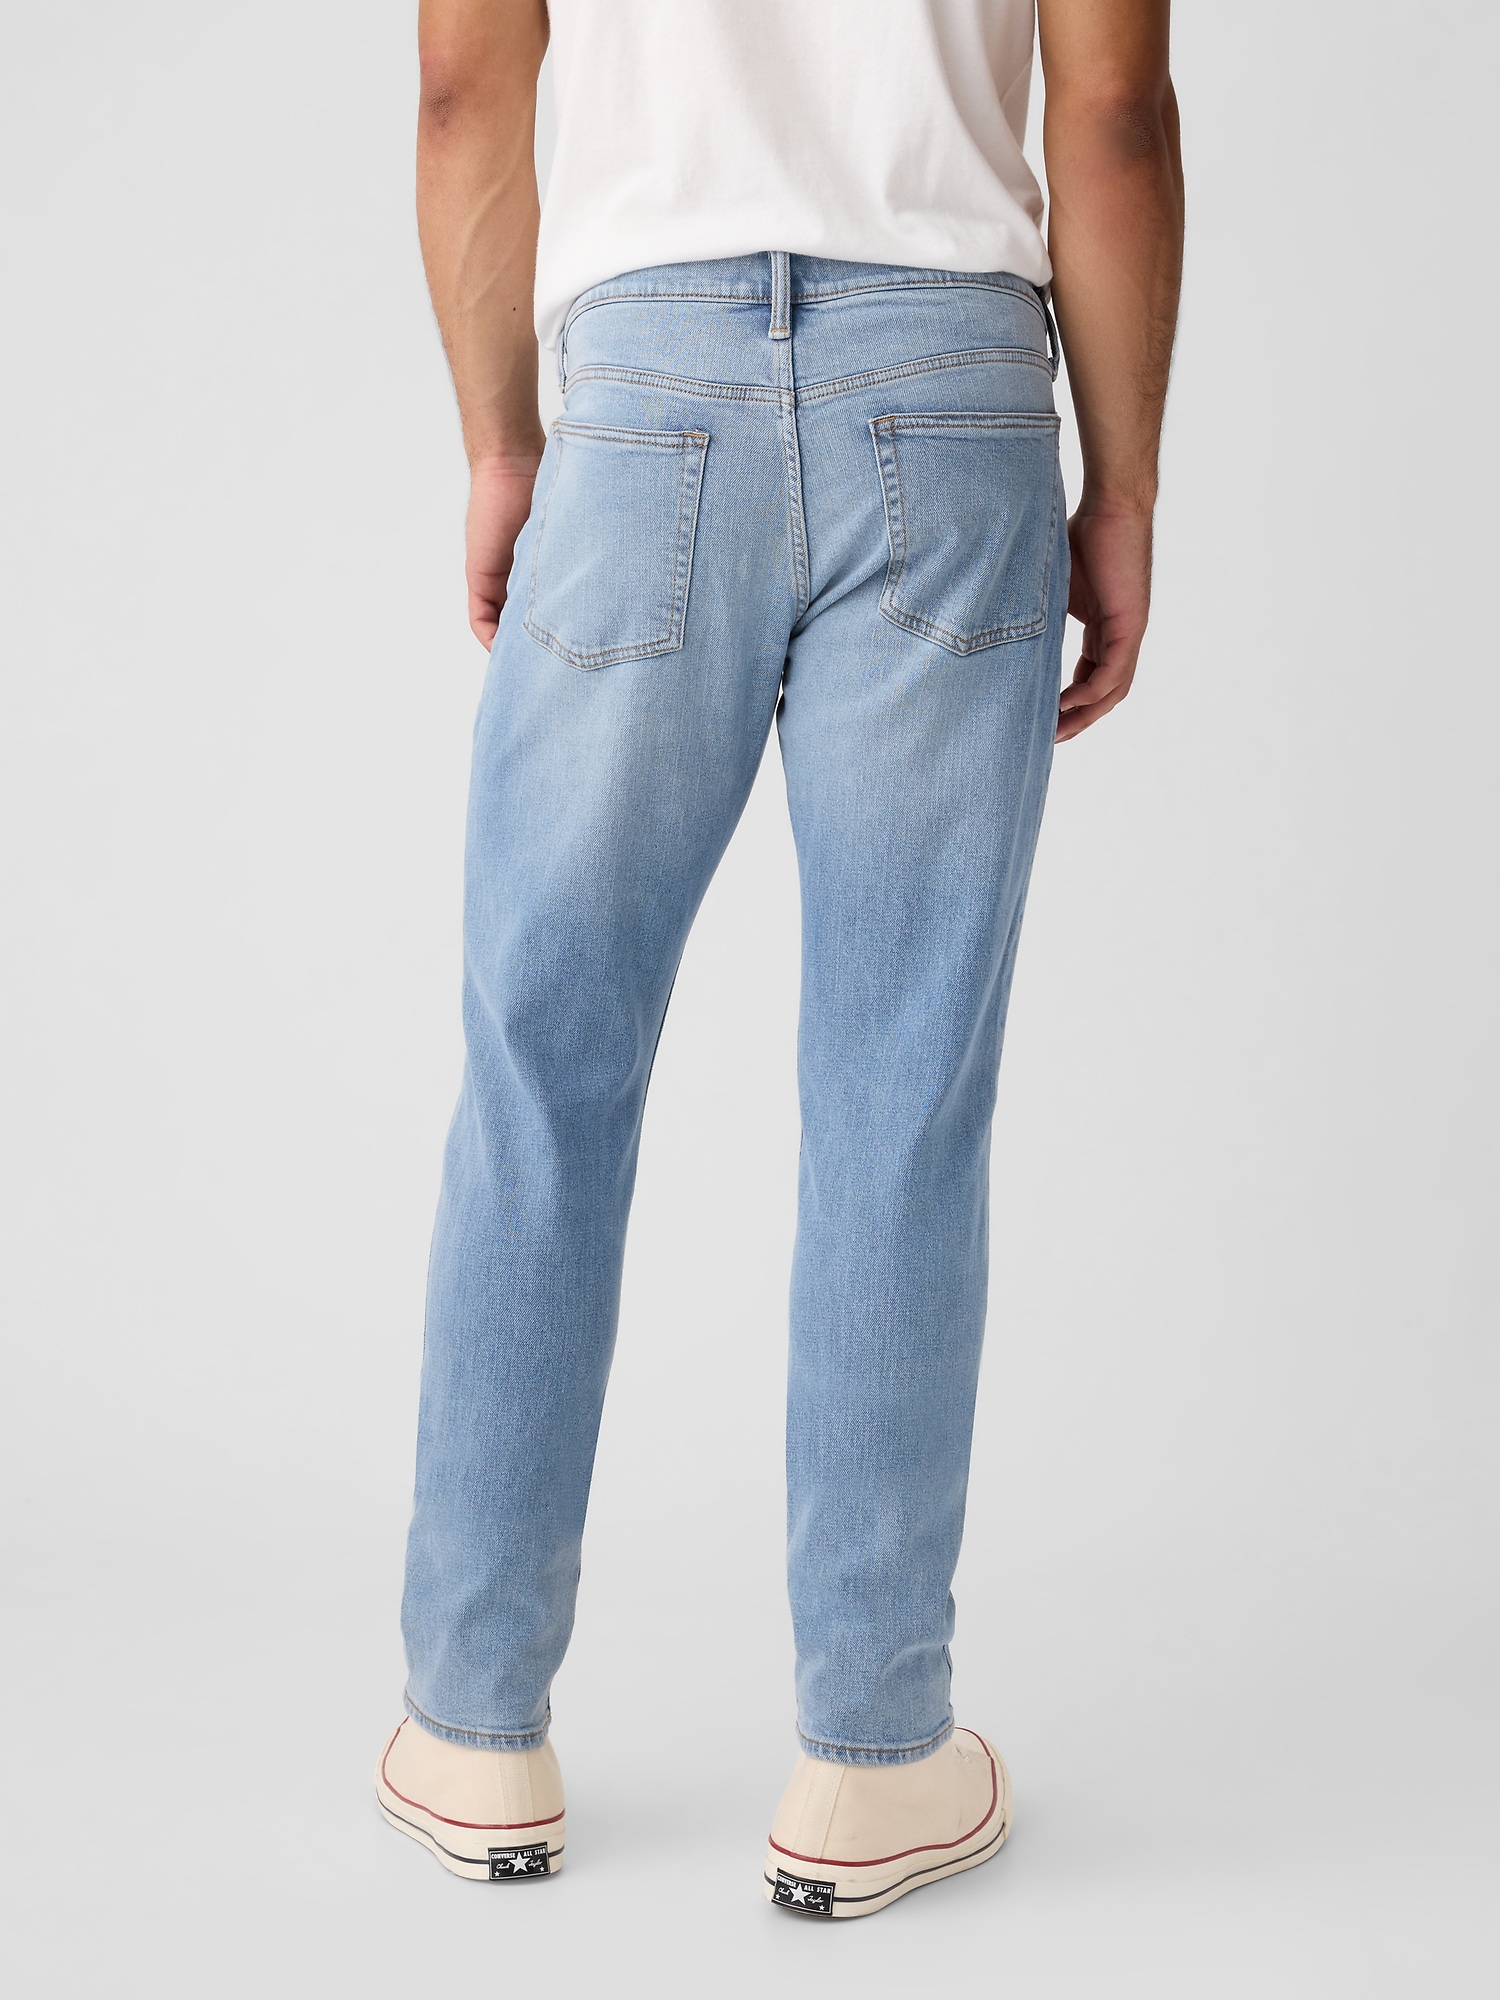 GAP, Jeans, Mens Slim Taper Gapflex Jeans With Washwell Size 36x32